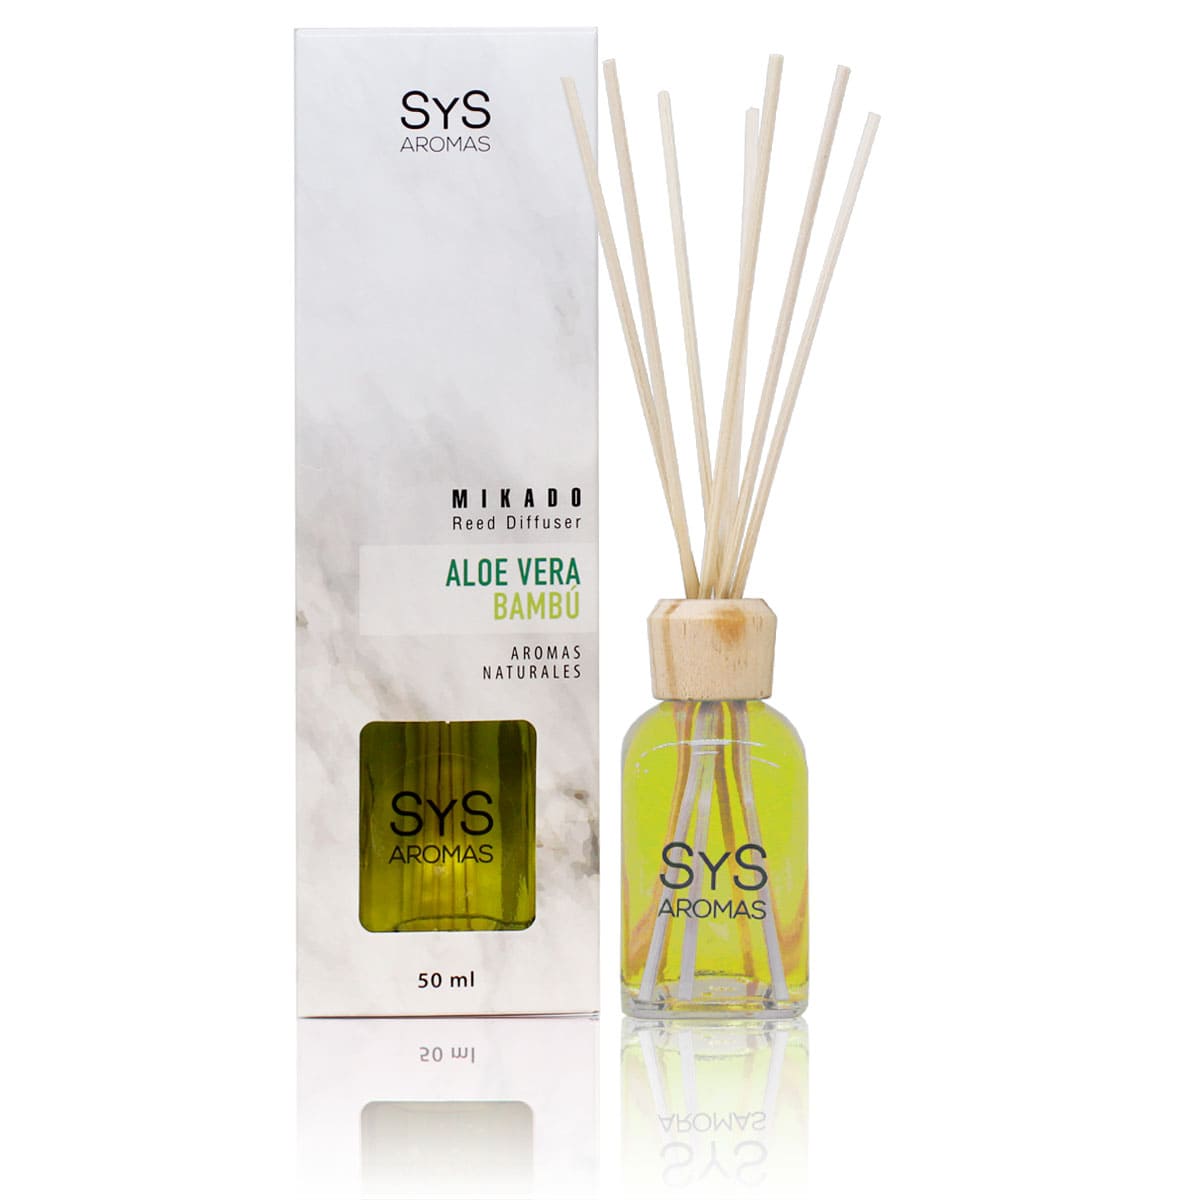 Buy Aloe vera Bamboo Mikado Air freshener 50ml Marmol Collection SYS Aromas